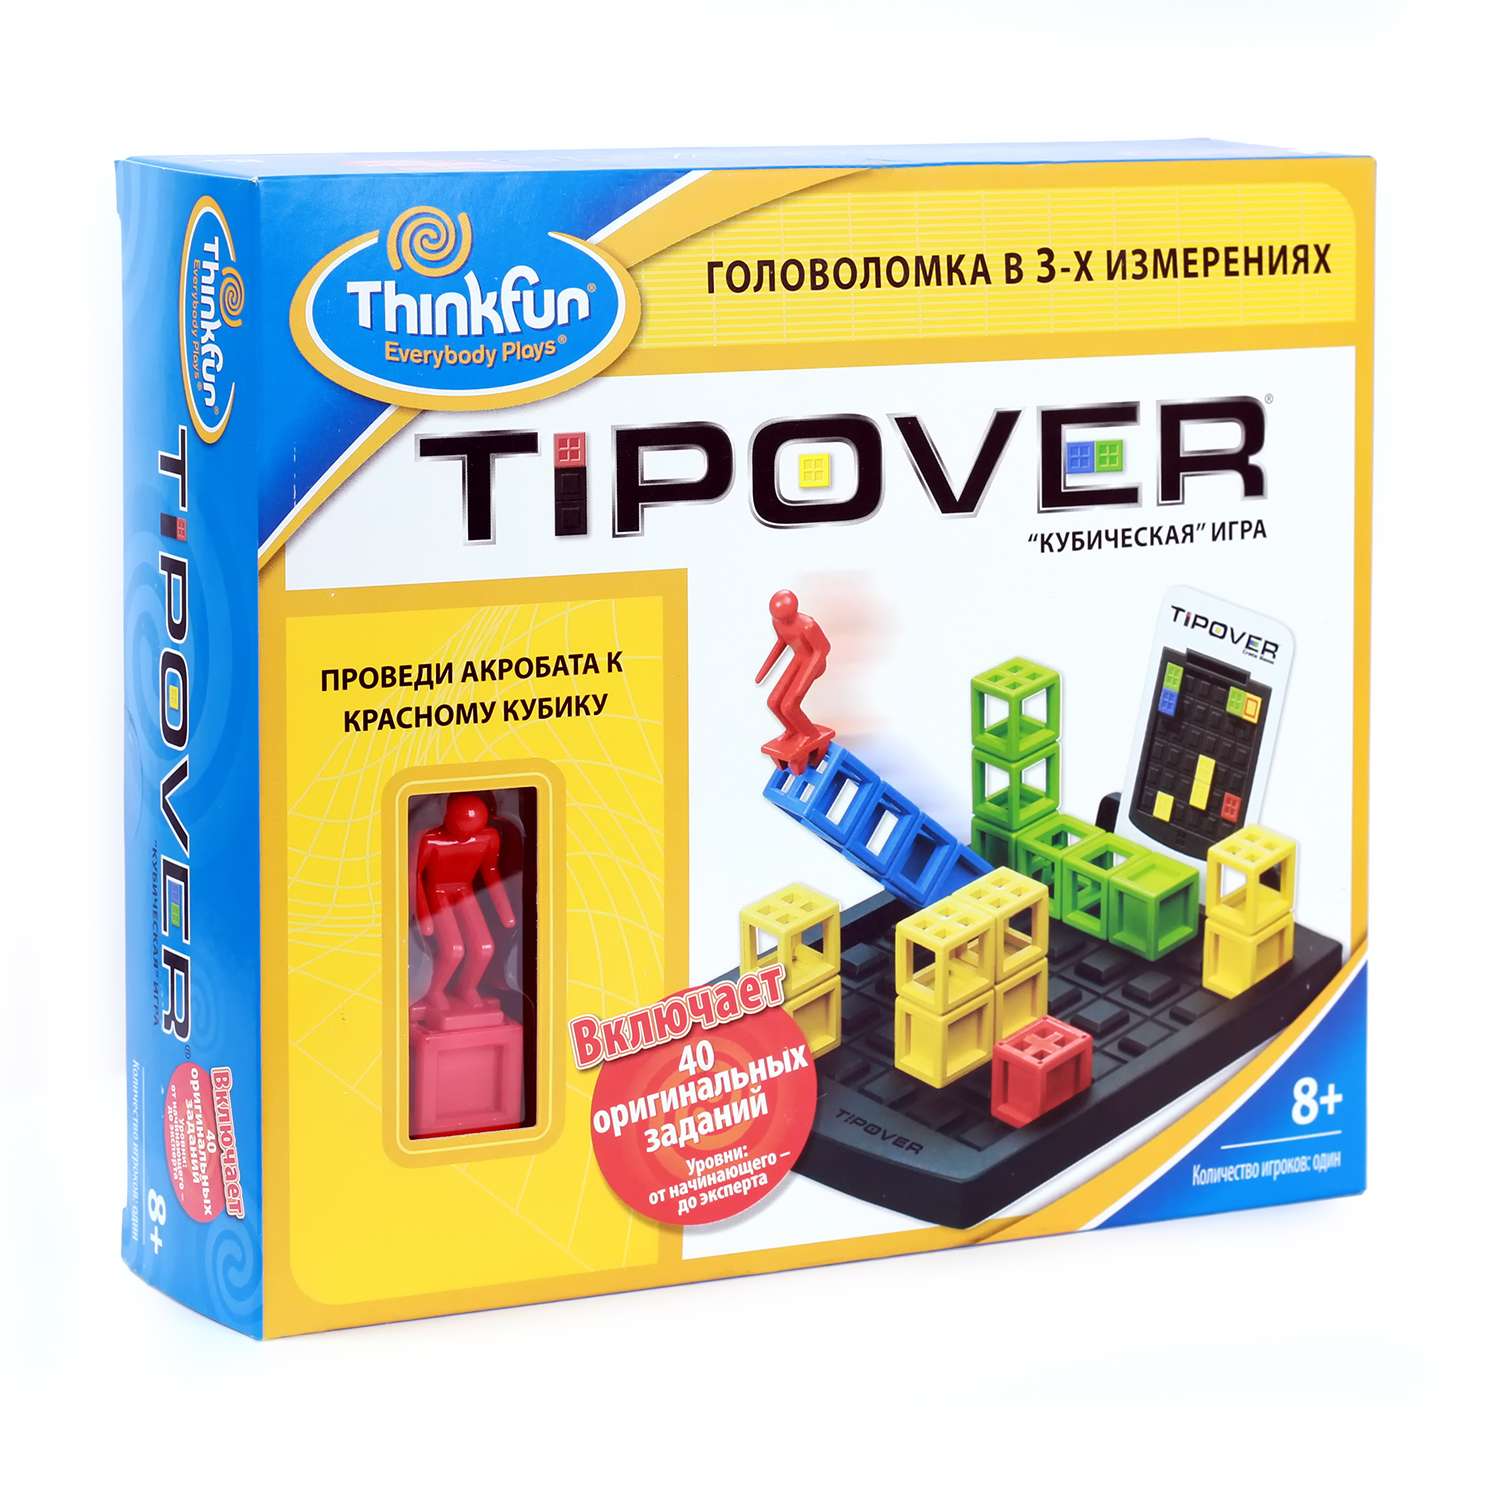 Кубическая головоломка Thinkfun Tipover - фото 2